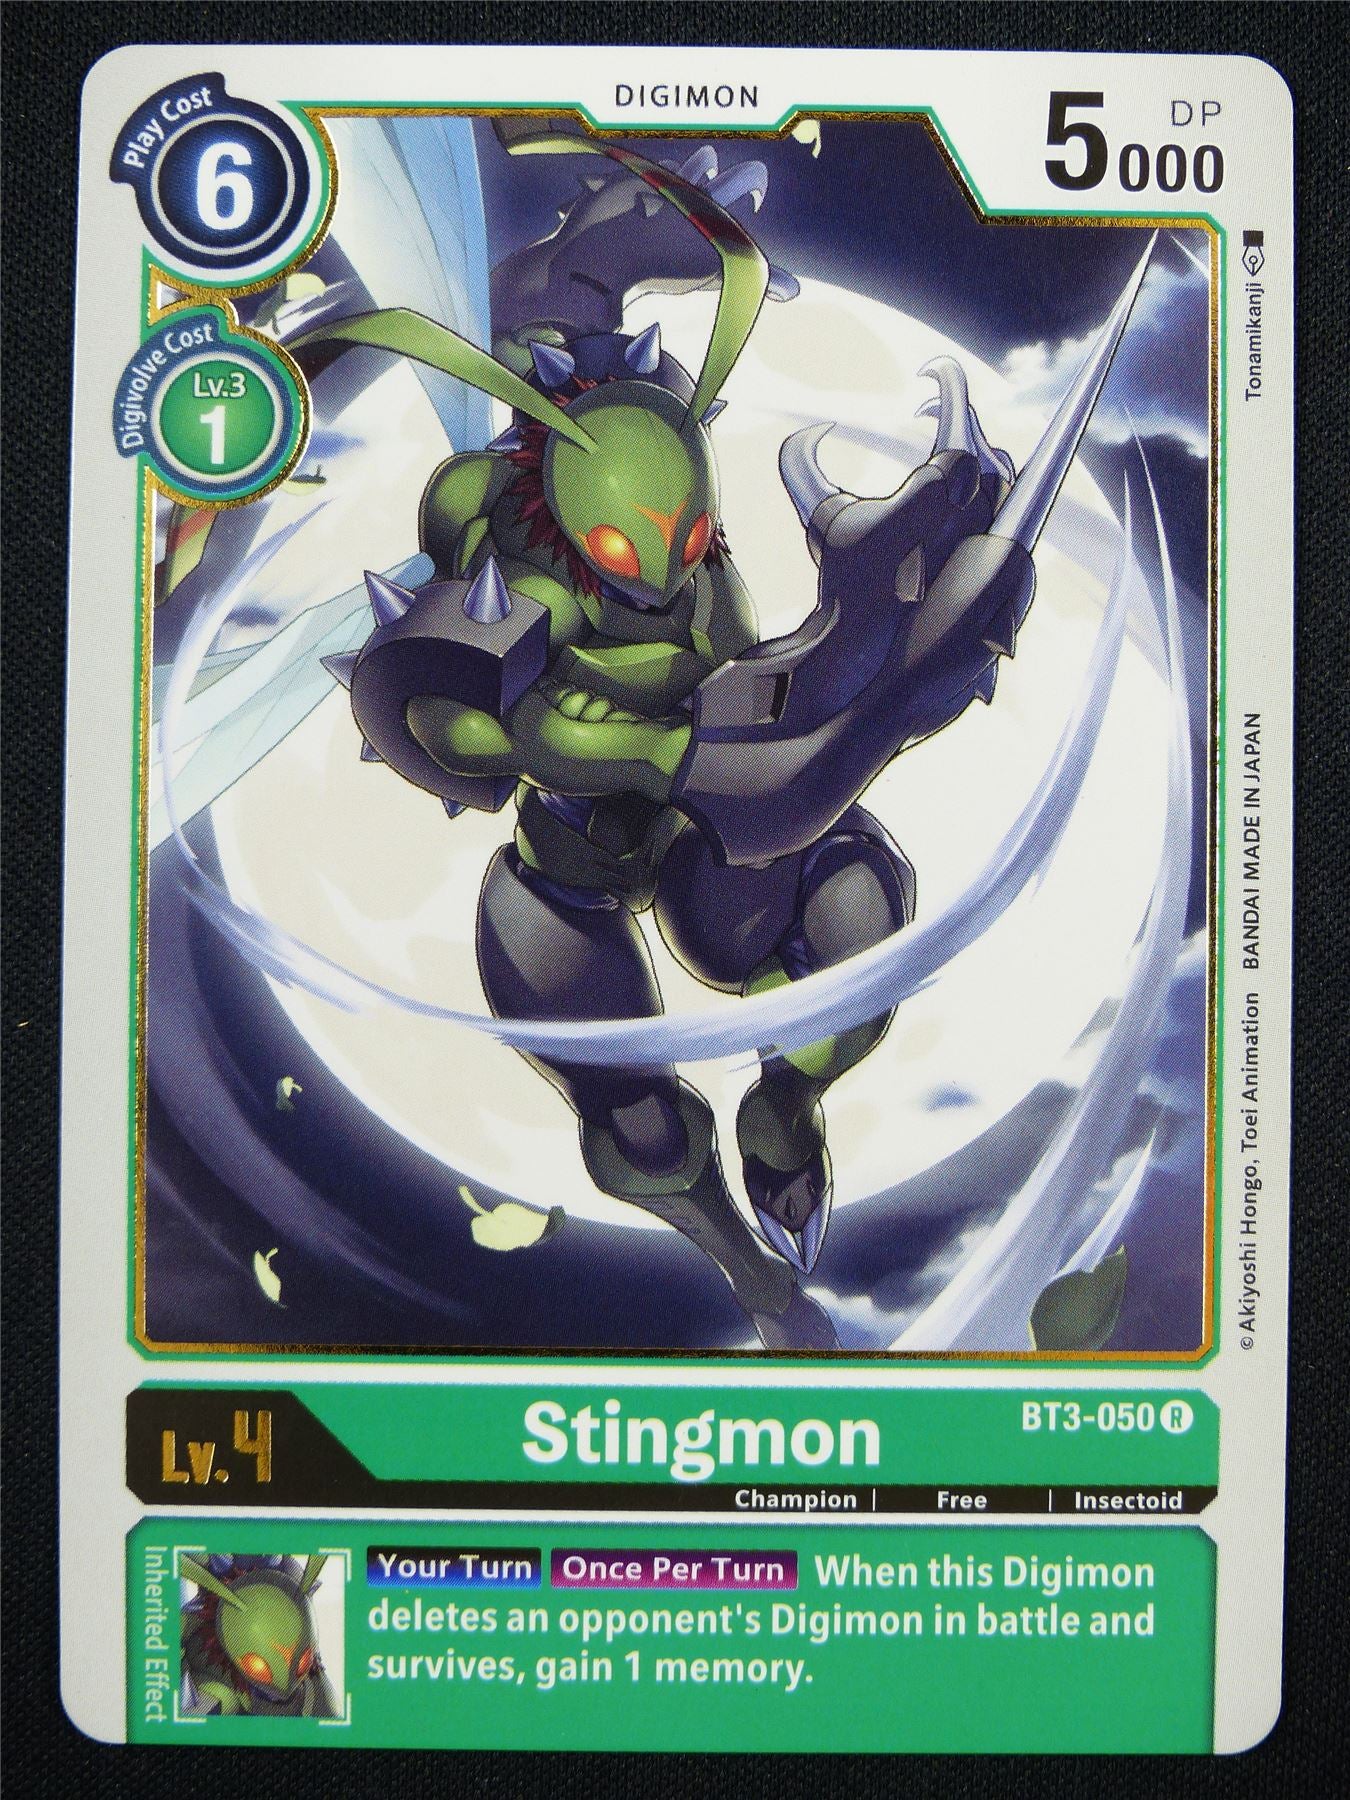 Stingmon BT3-050 R - Digimon Card #17V